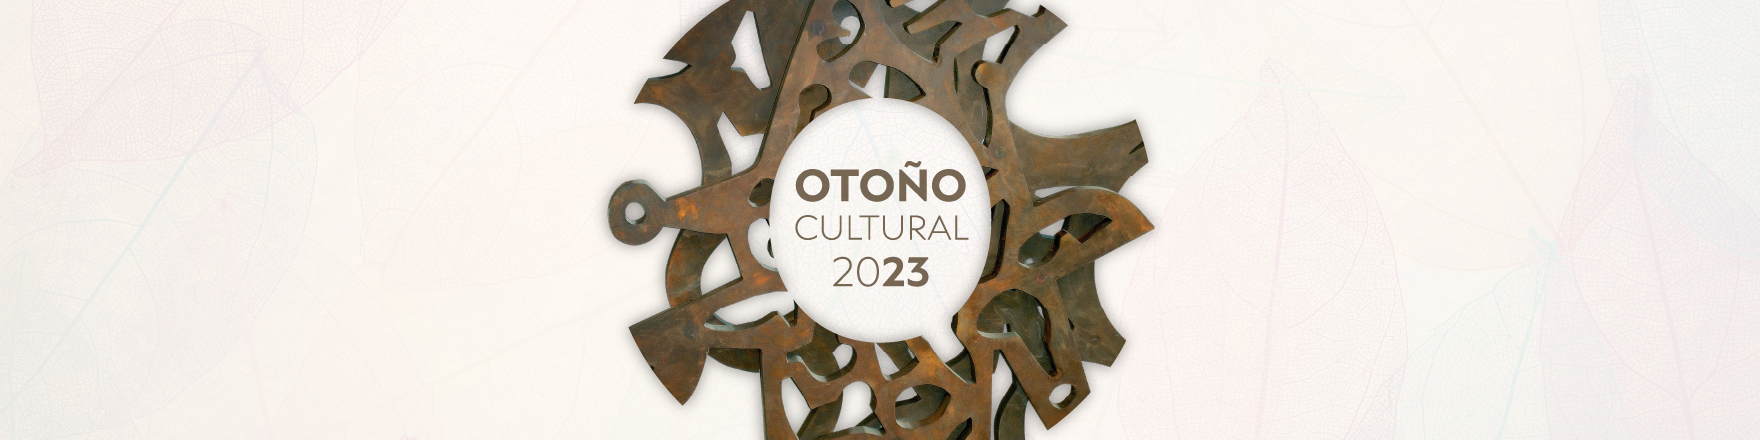 Otoño Cultural 2023